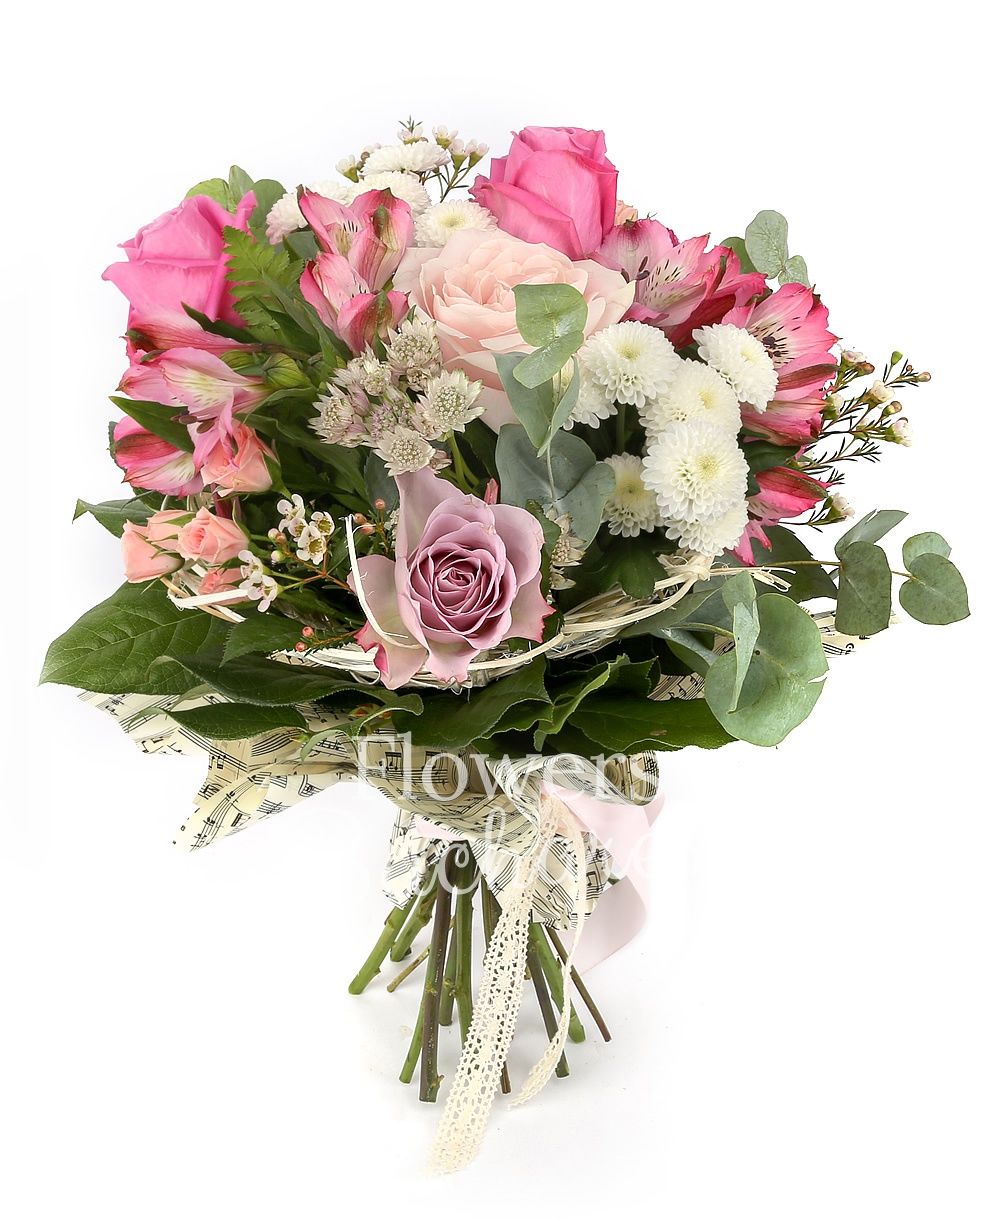 3 cyclam roses, 2 pink roses, 2 mauve roses, 3 pink miniroses, 3 pink alstroemeria, 2 white santini, white astranția, greenery